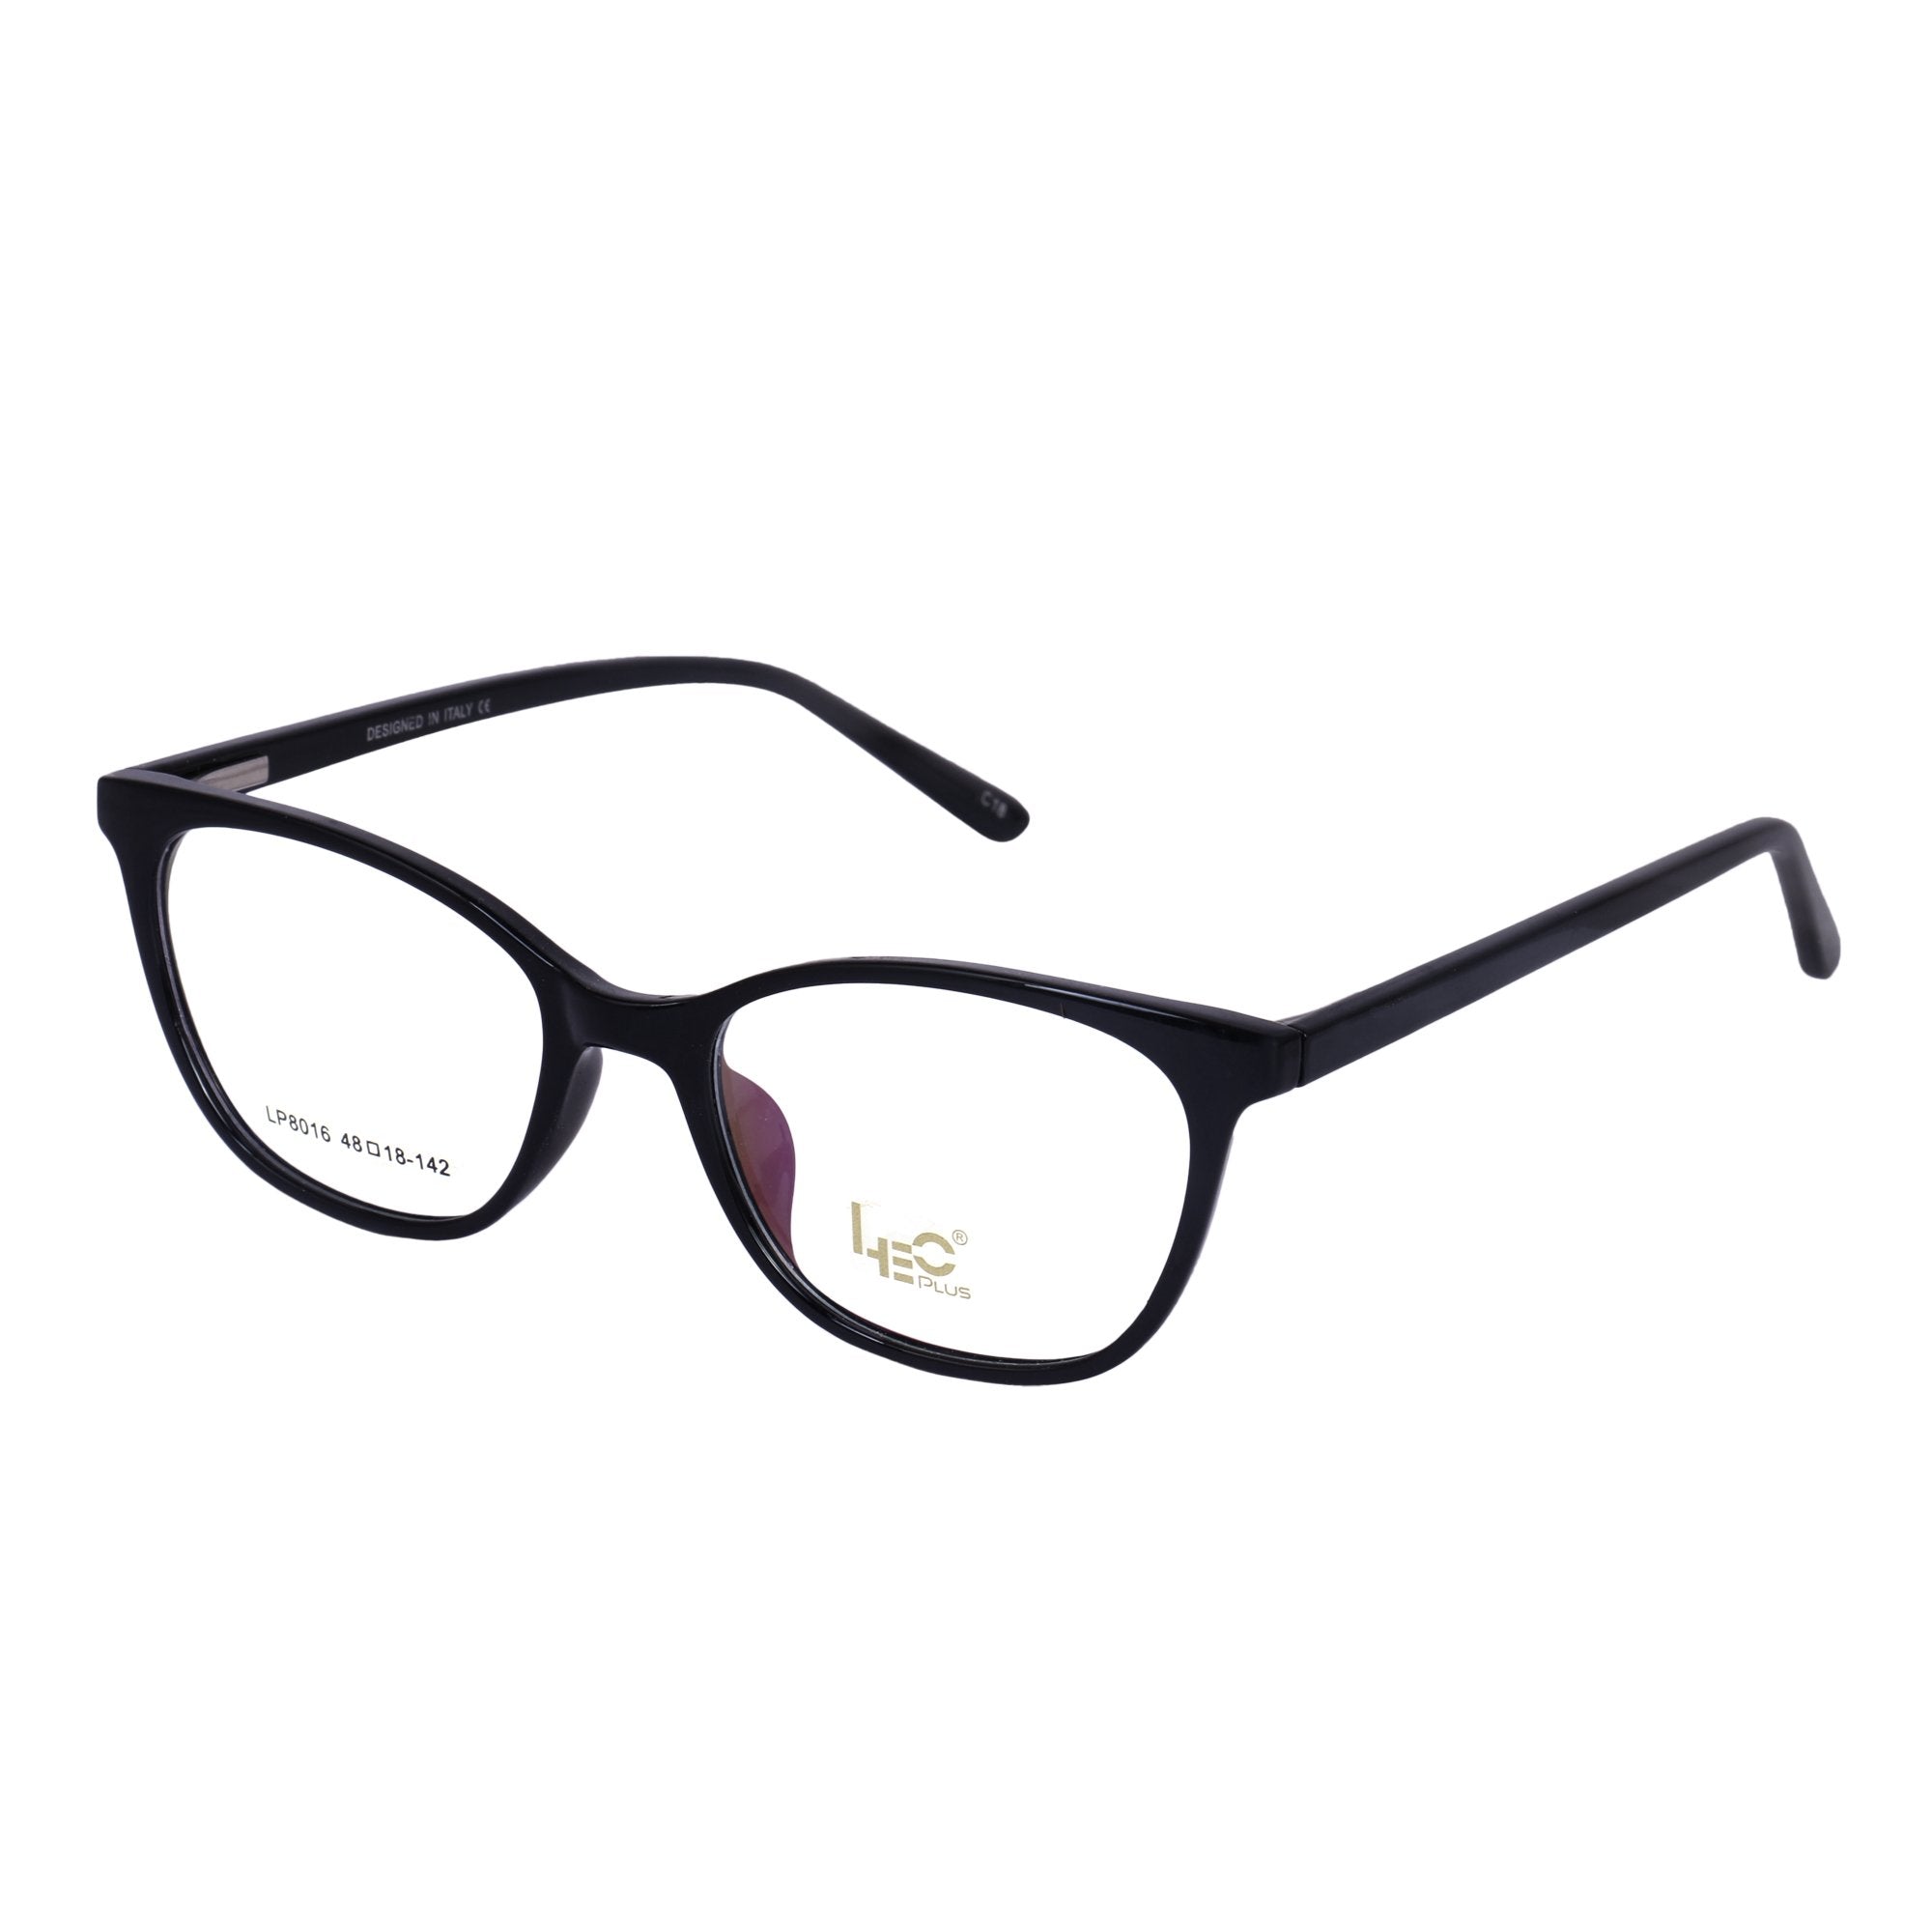 Black Cateye Rimmed Eyeglasses - LP8016